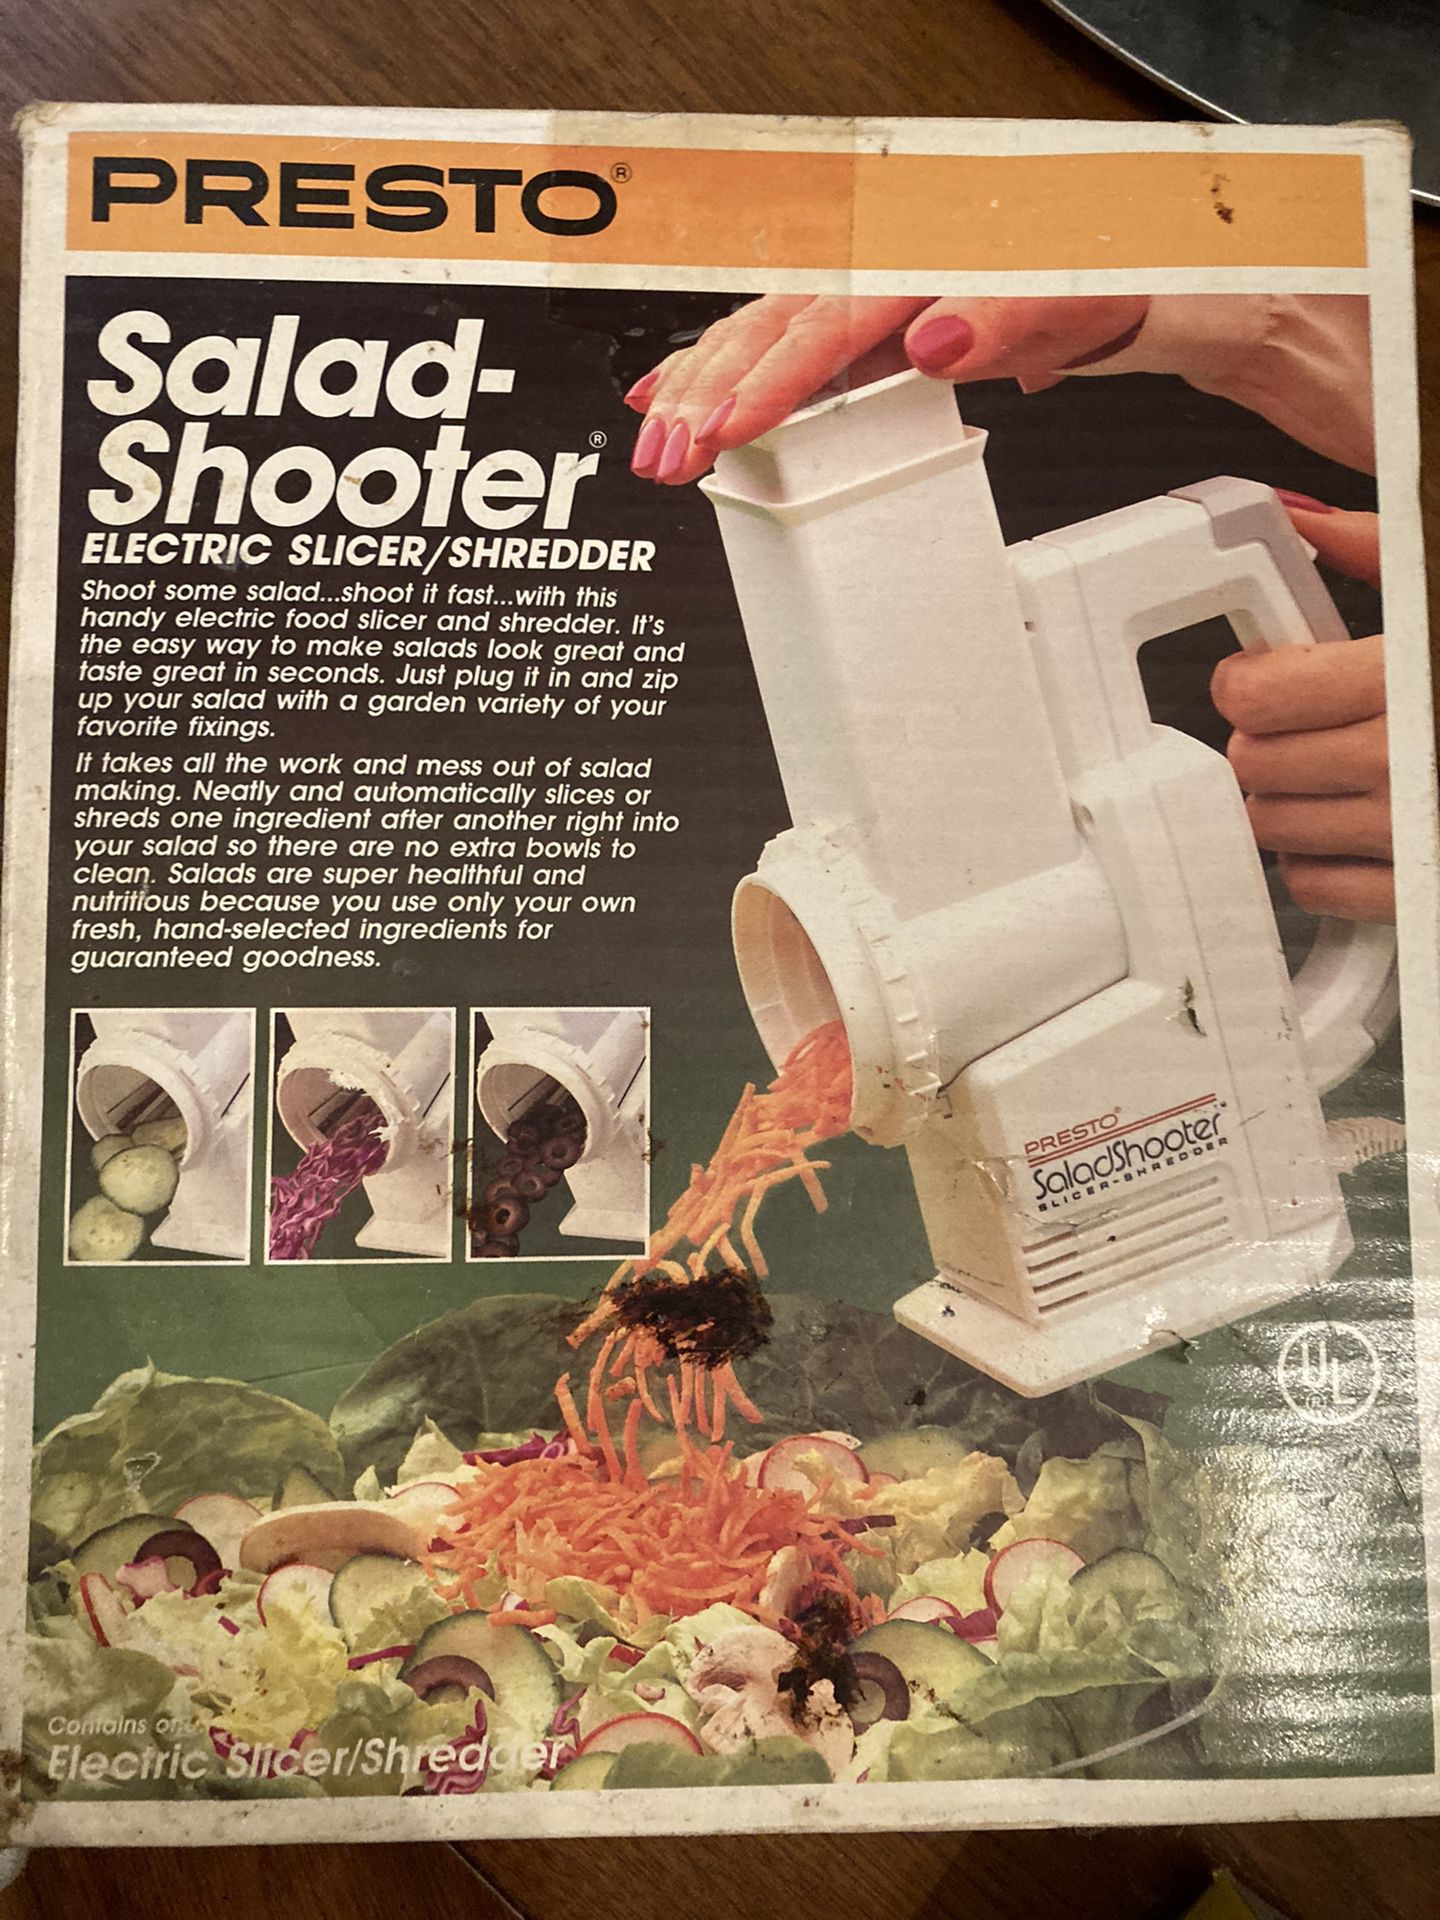 Presto SaladShooter Electric Slicer and Shredder